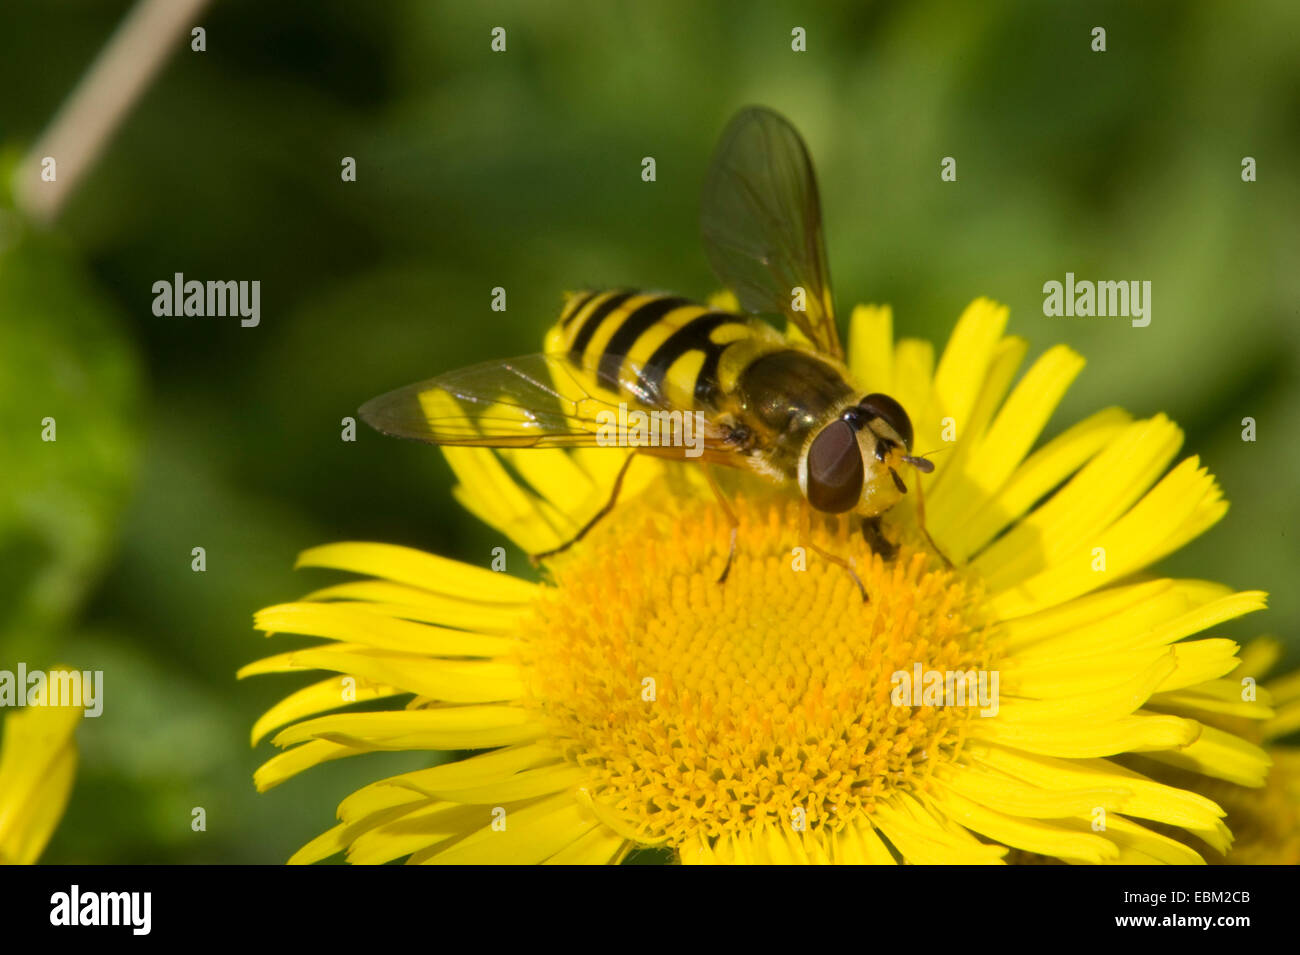 Hover Fly, groseille bagués commun Hoverfly (Syrphus ribesii), assis sur une fleur jaune, Allemagne Banque D'Images